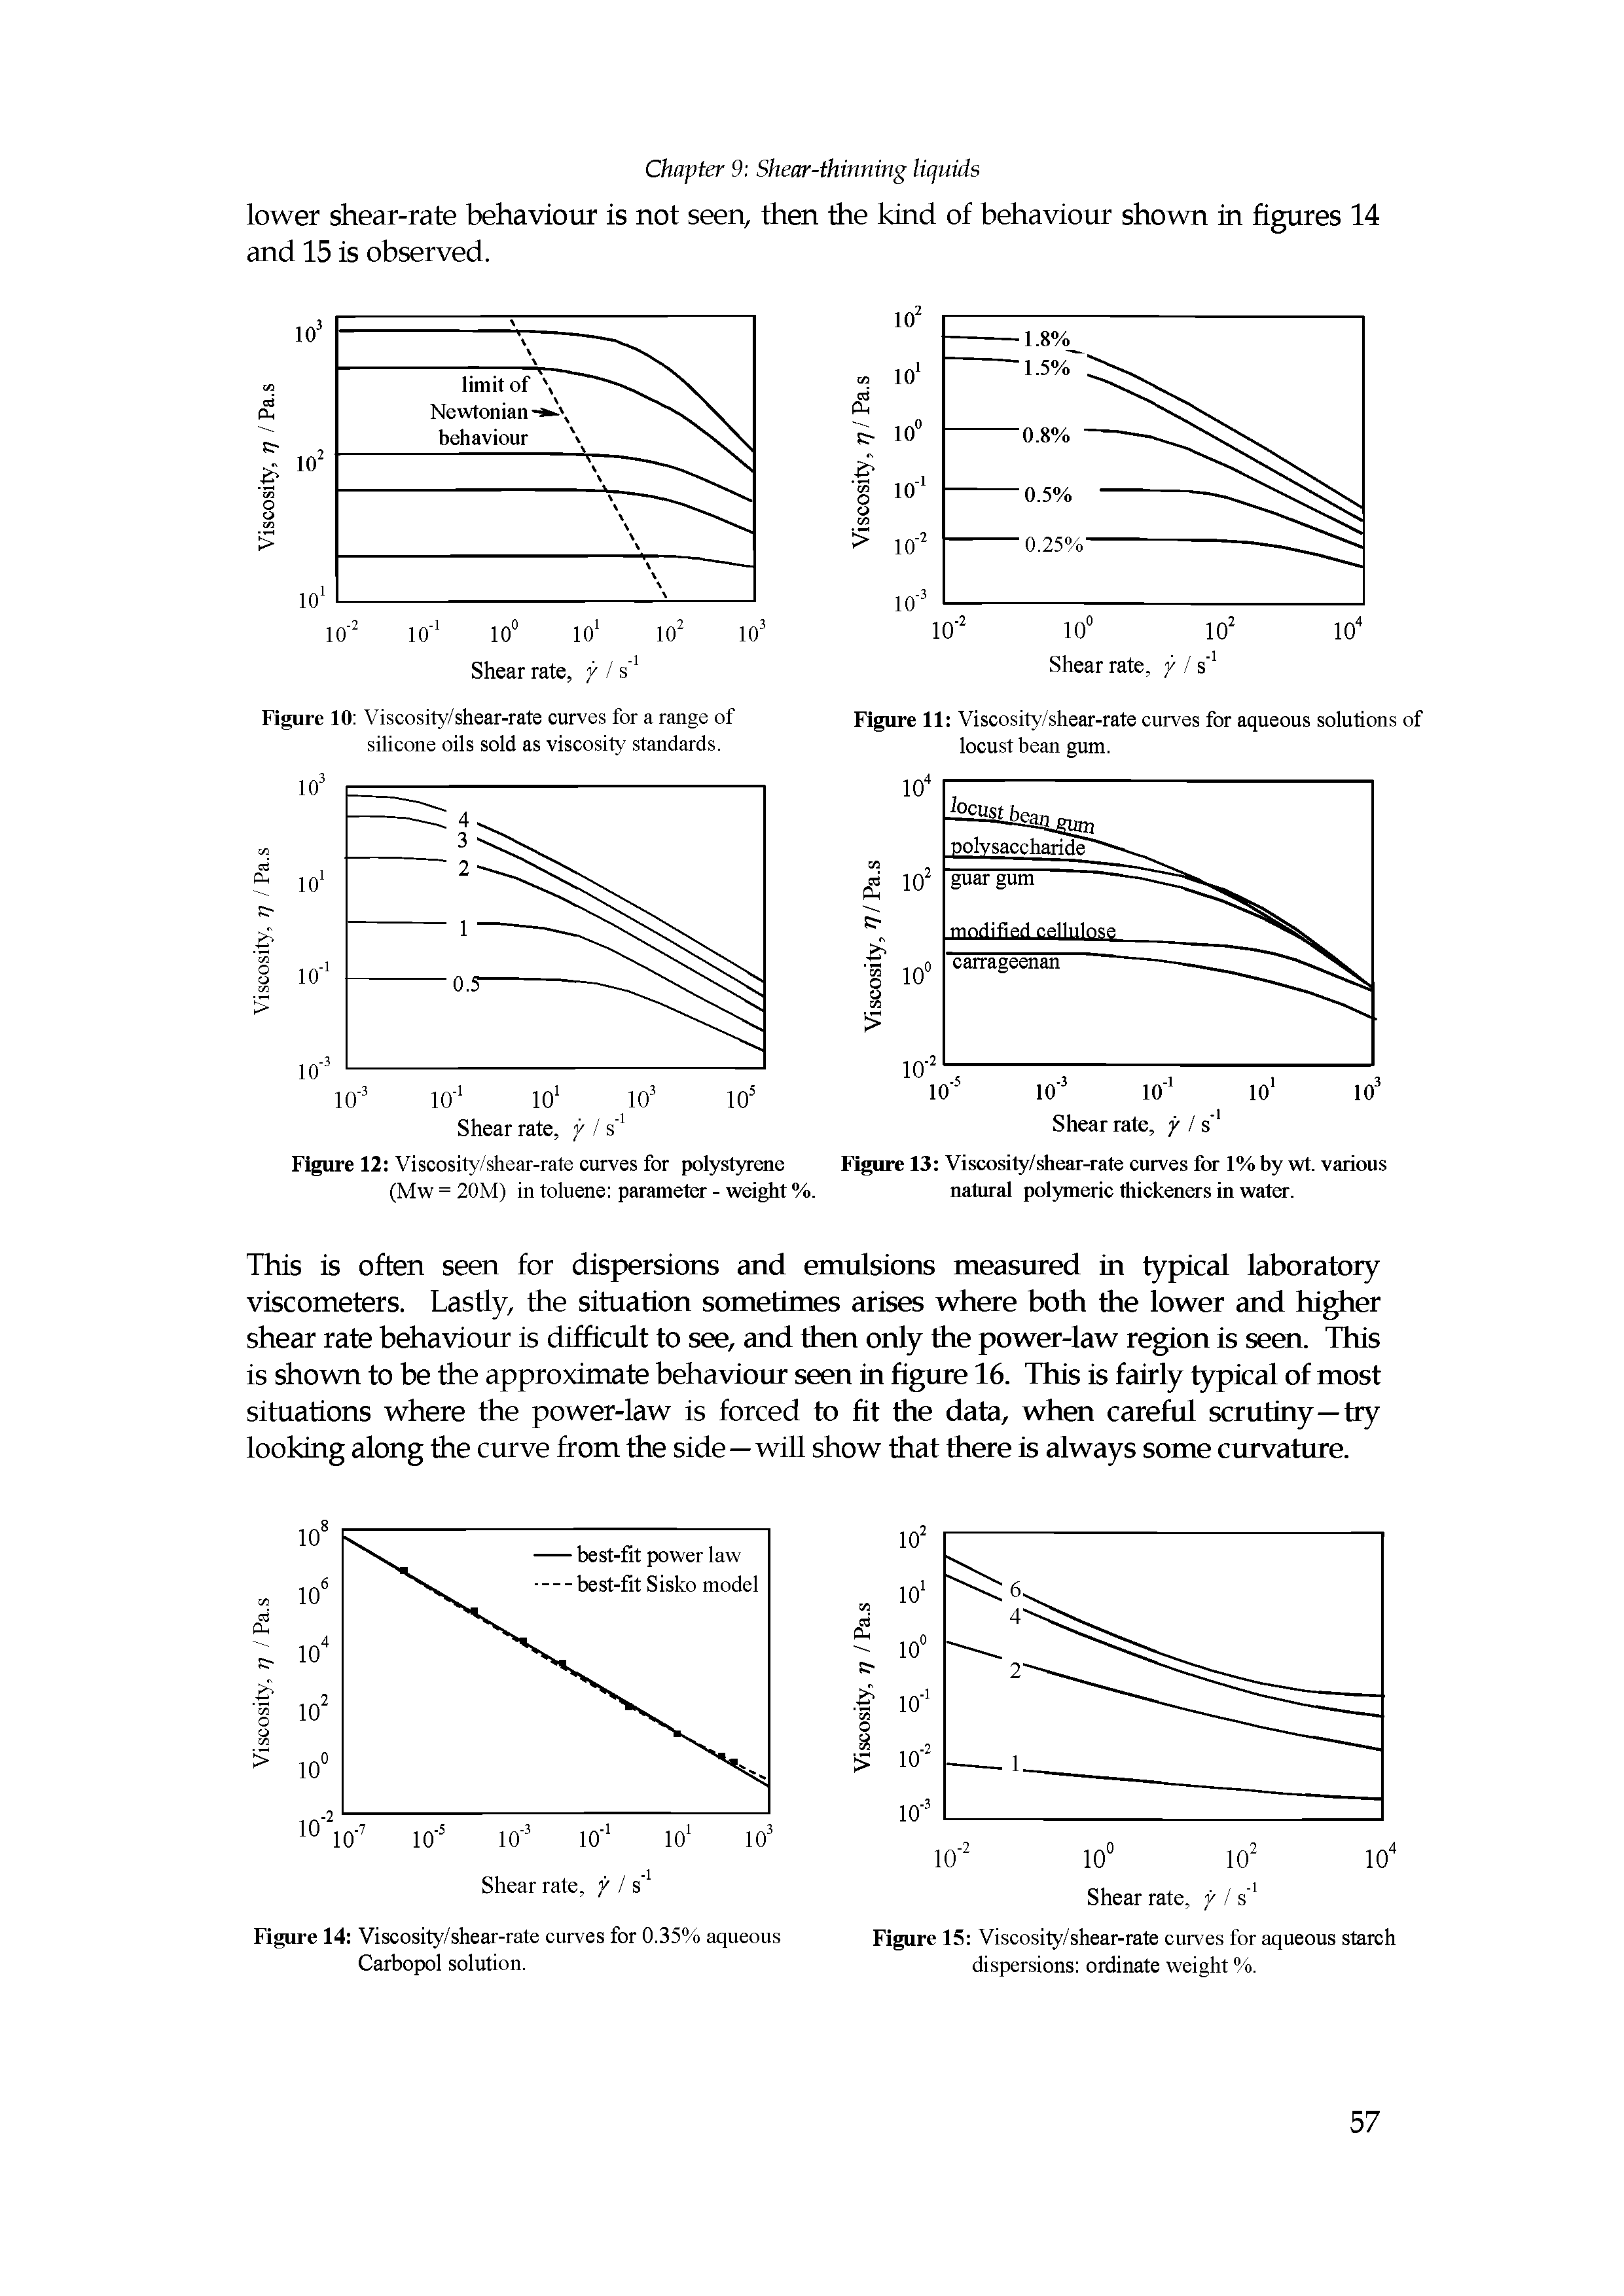 Figure 11 Viscosity/shear-rate curves for aqueous solutions of locust bean gum.